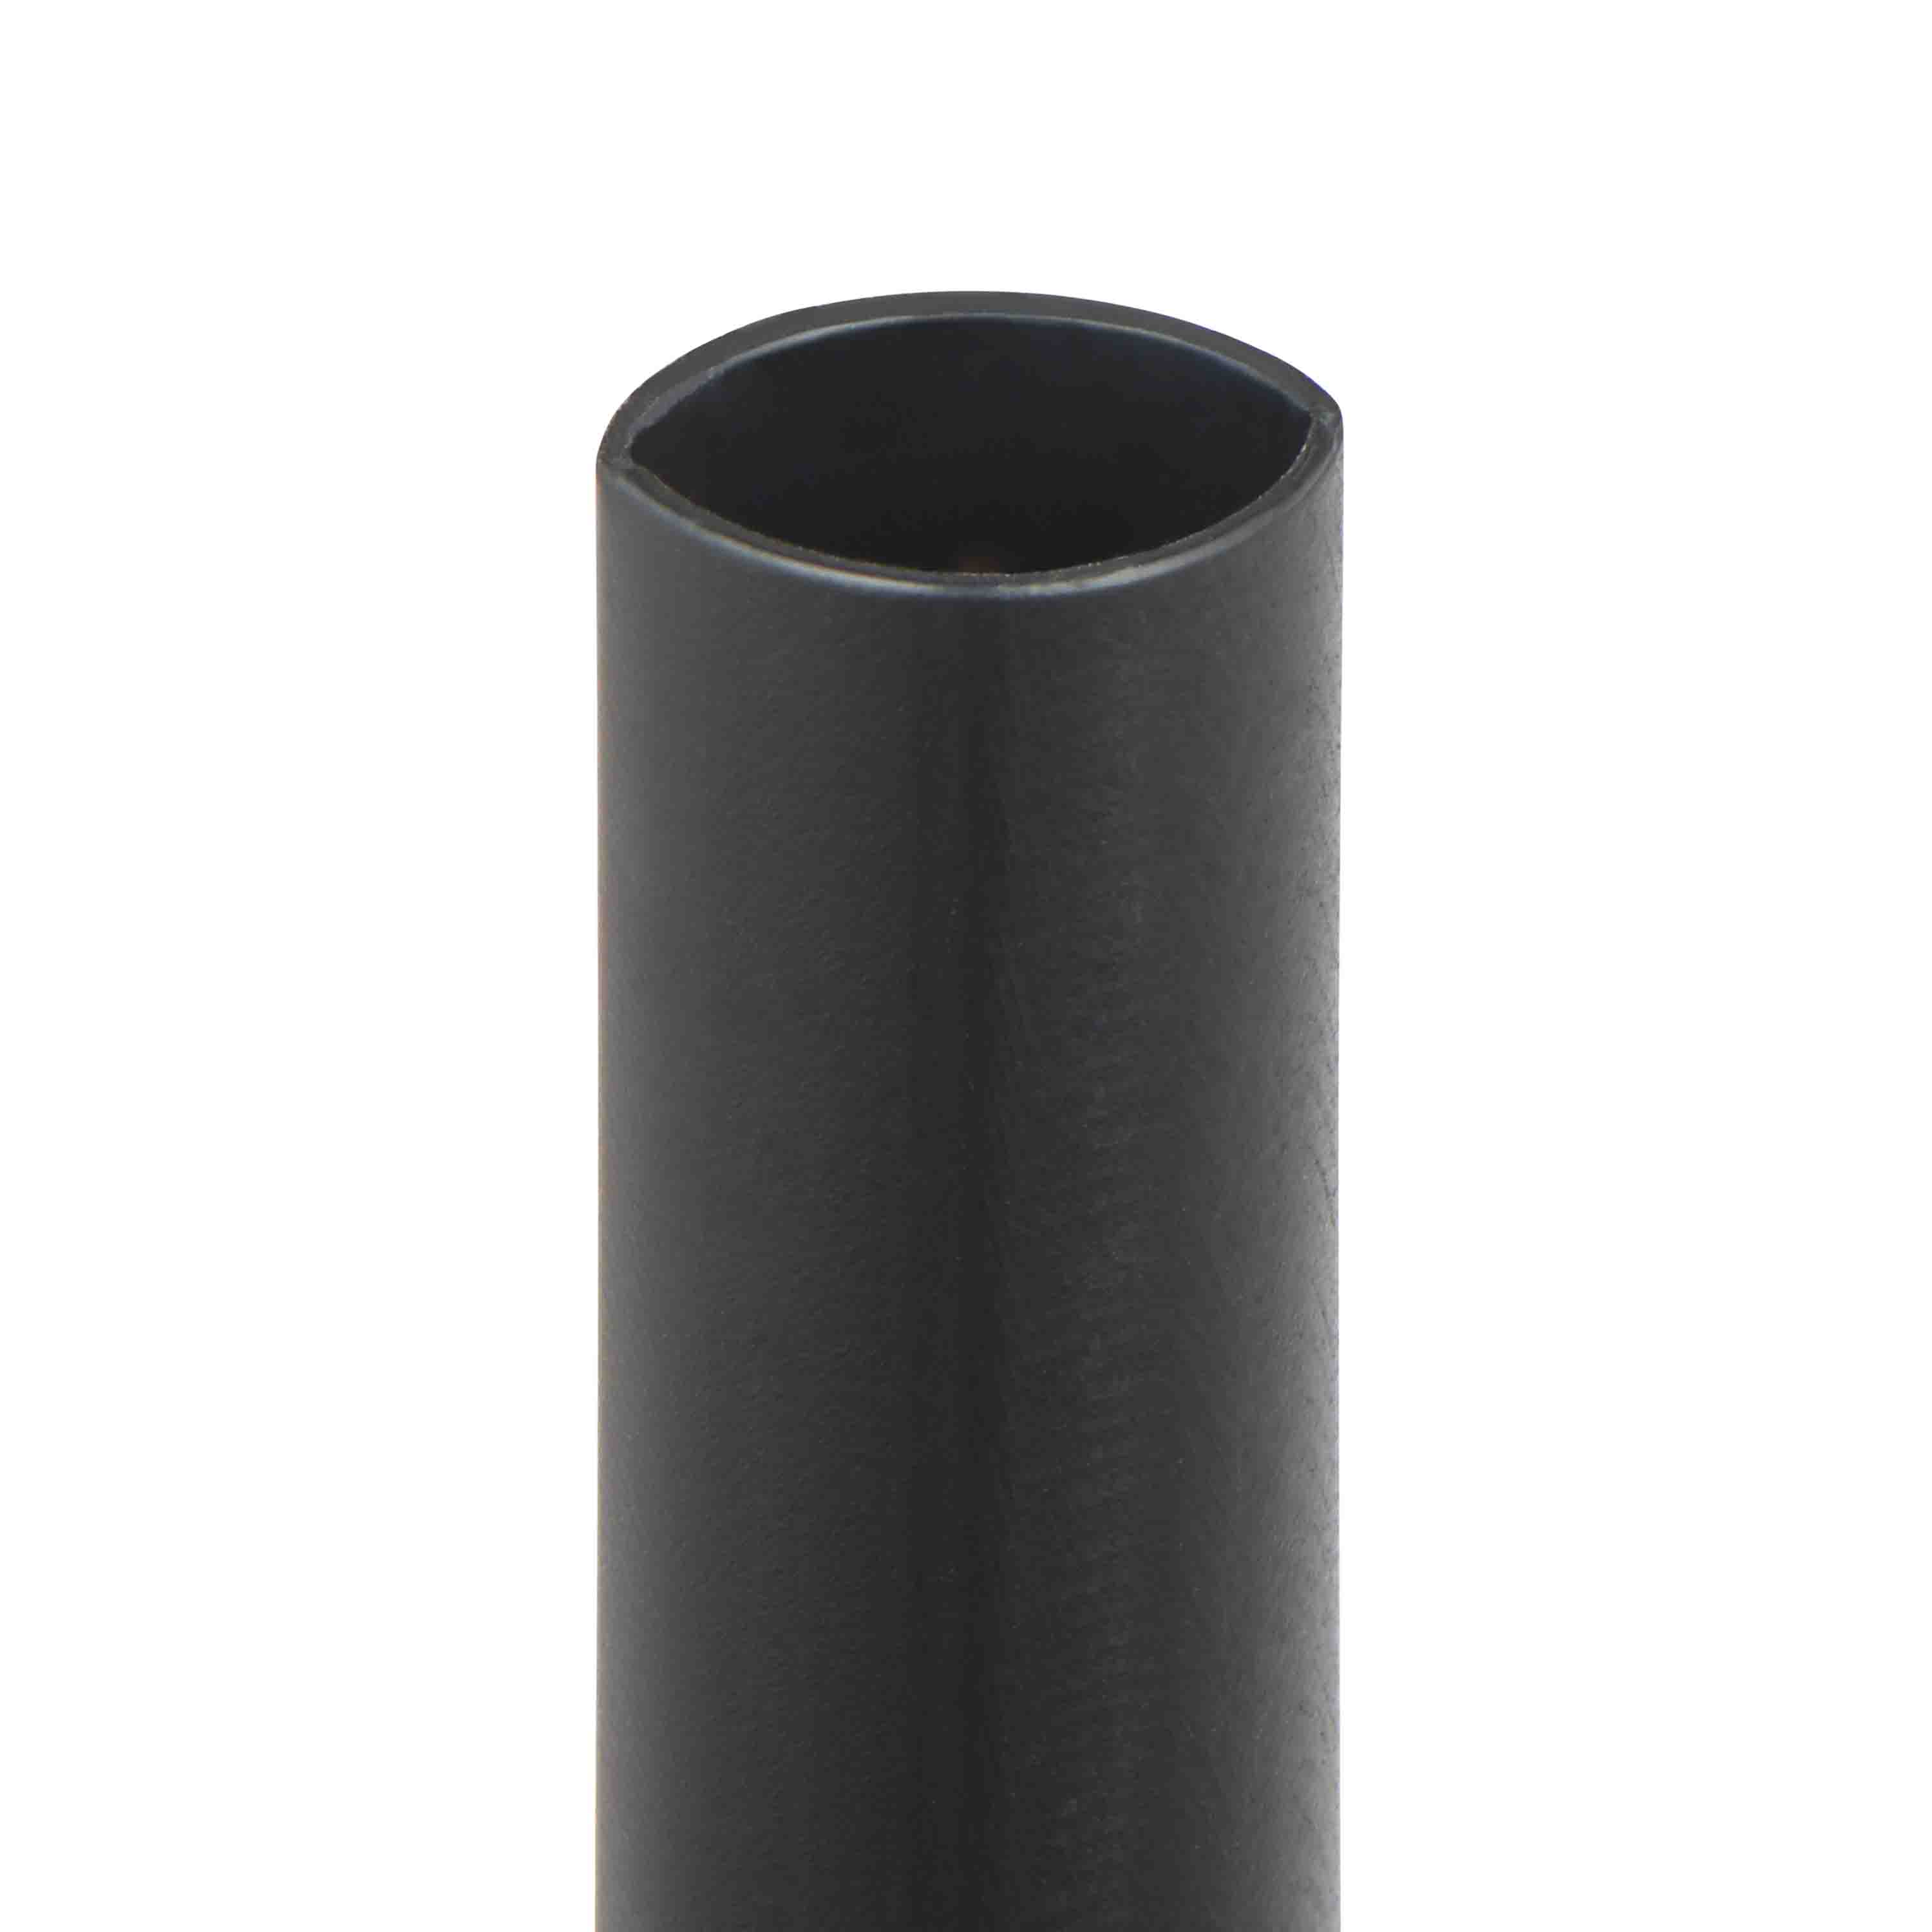 Tubo termorretráctil 3M de Poliolefina Negro, contracción 4.5:1, Ø 50mm, long. 1m, forrado con adhesivo